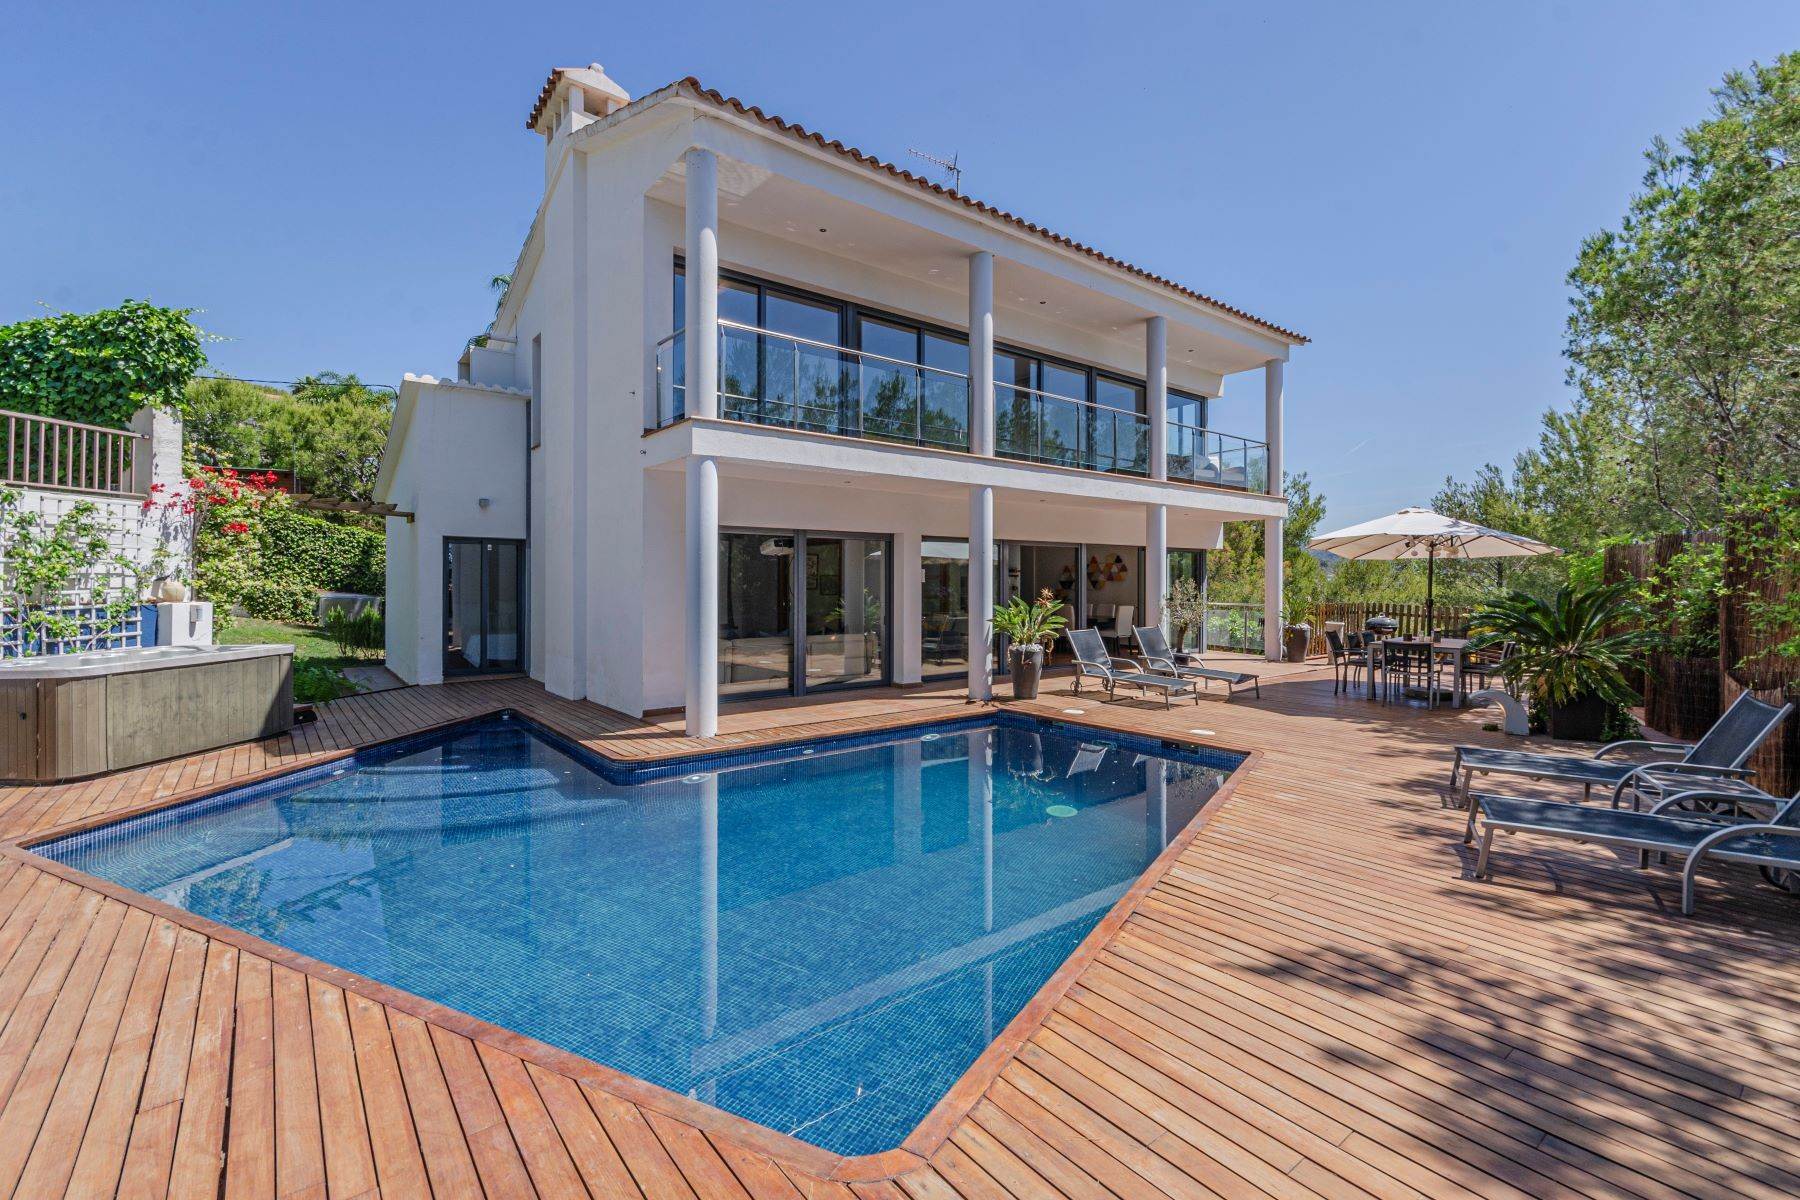 Property for Sale at Superb 4 bedrooms villa on the hills of Vallpineda Other Costa Brava, Costa Brava 08870 Spain